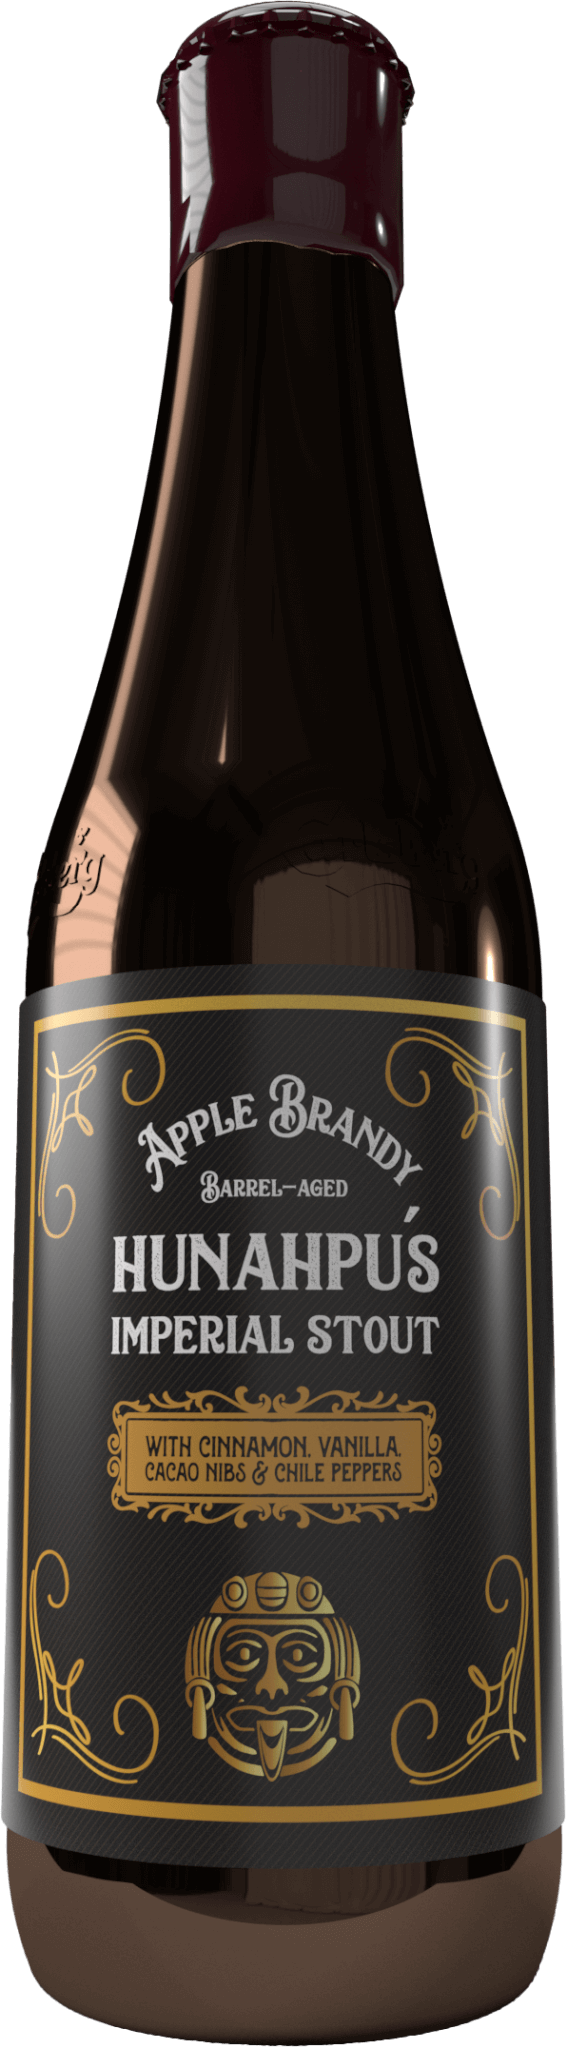 Apple Brandy Barrel-aged Hunahpu's Imperial Stout